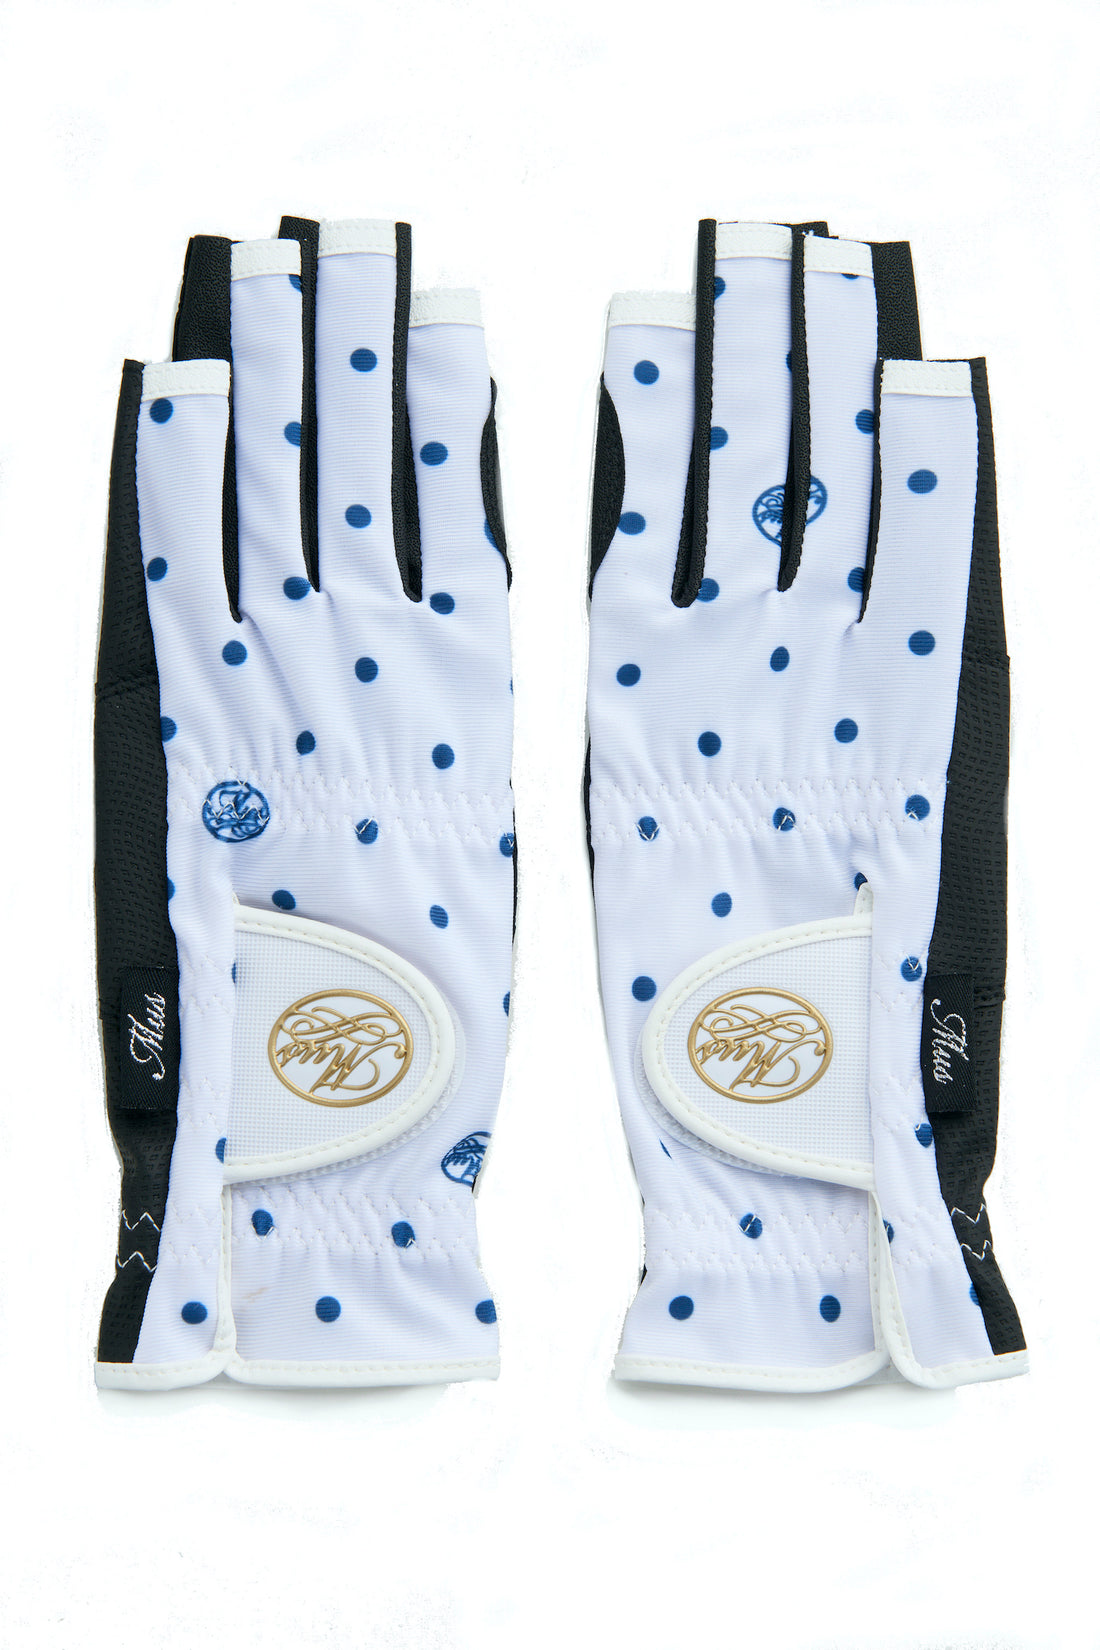 Polka dot and logo monogram all-over print two-handed gloves (703J1802)